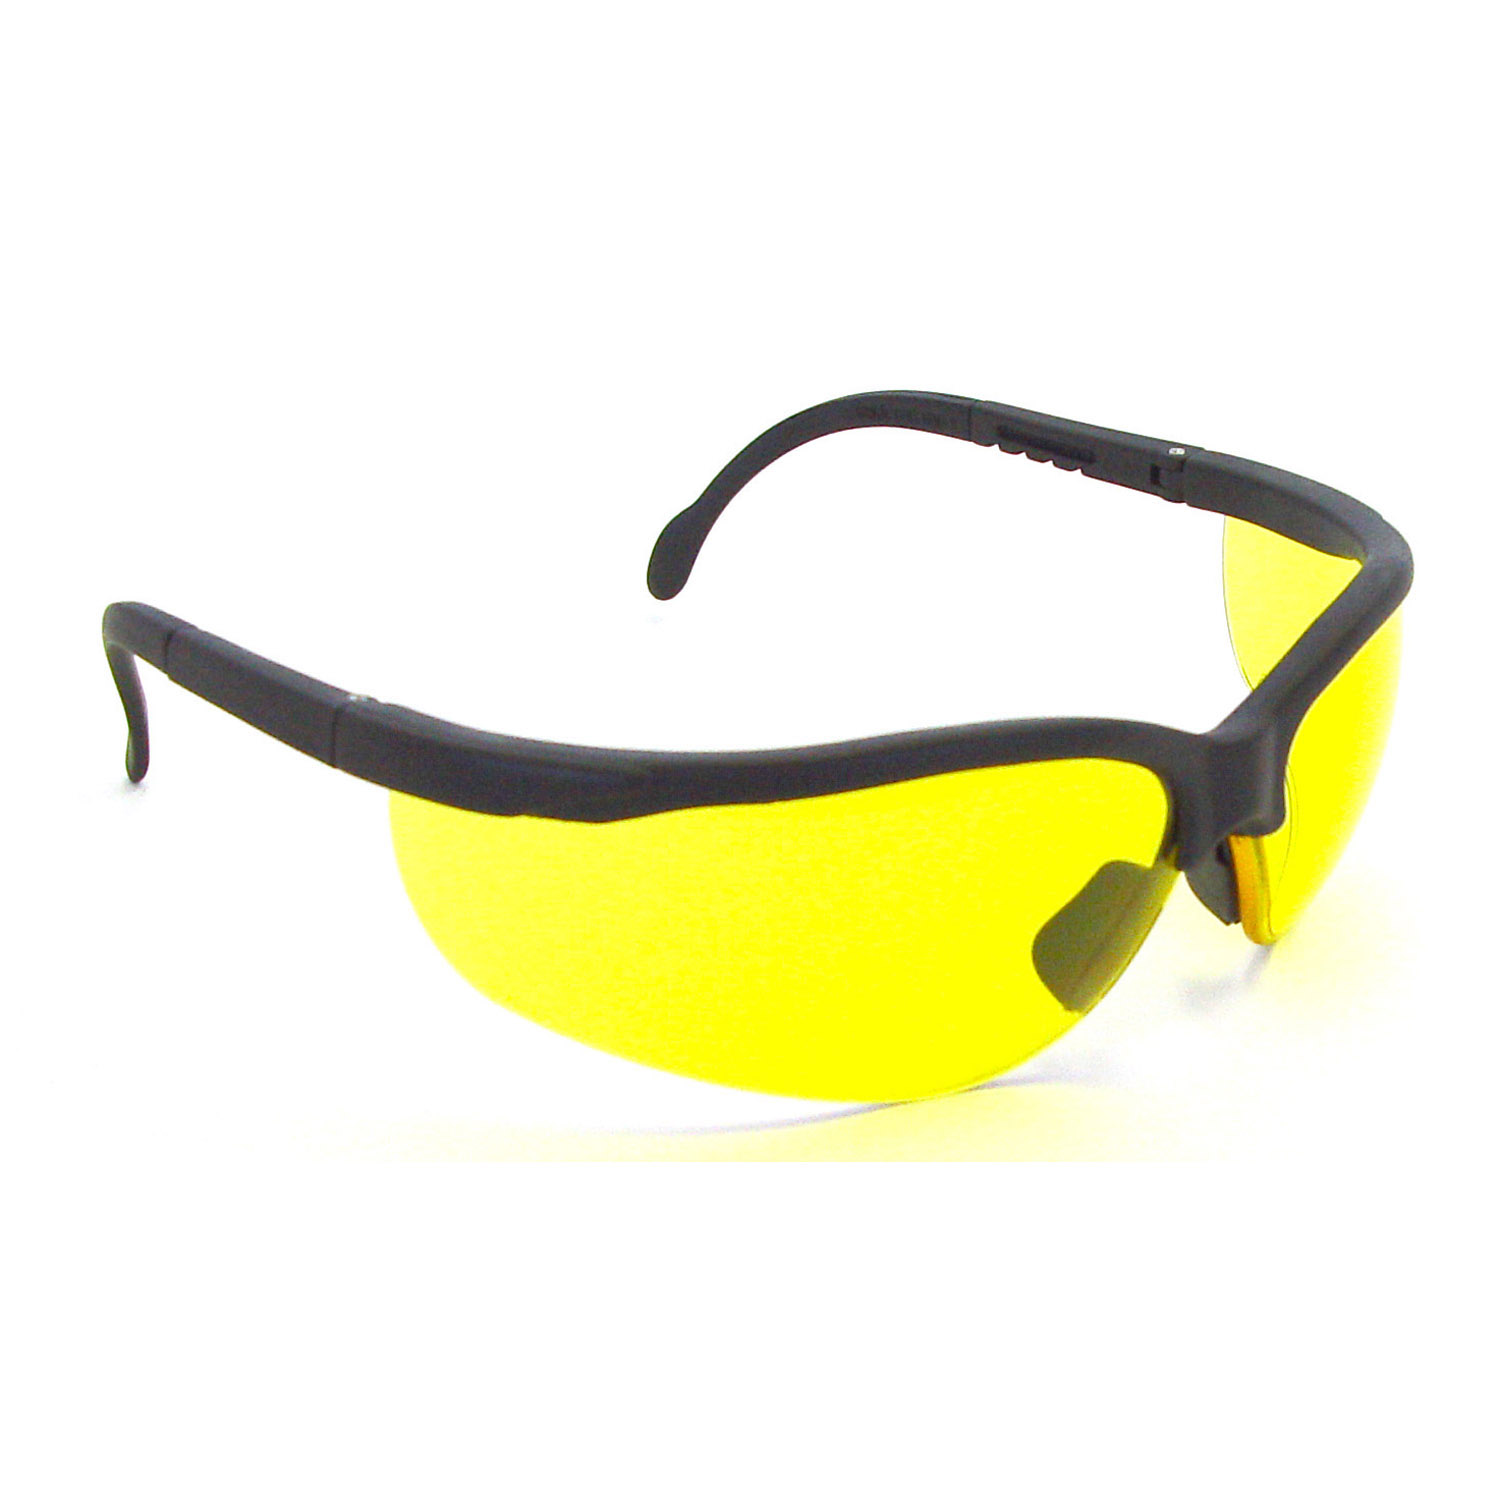 Journey® Safety Eyewear - Black Frame - Amber Lens - Tinted Lens